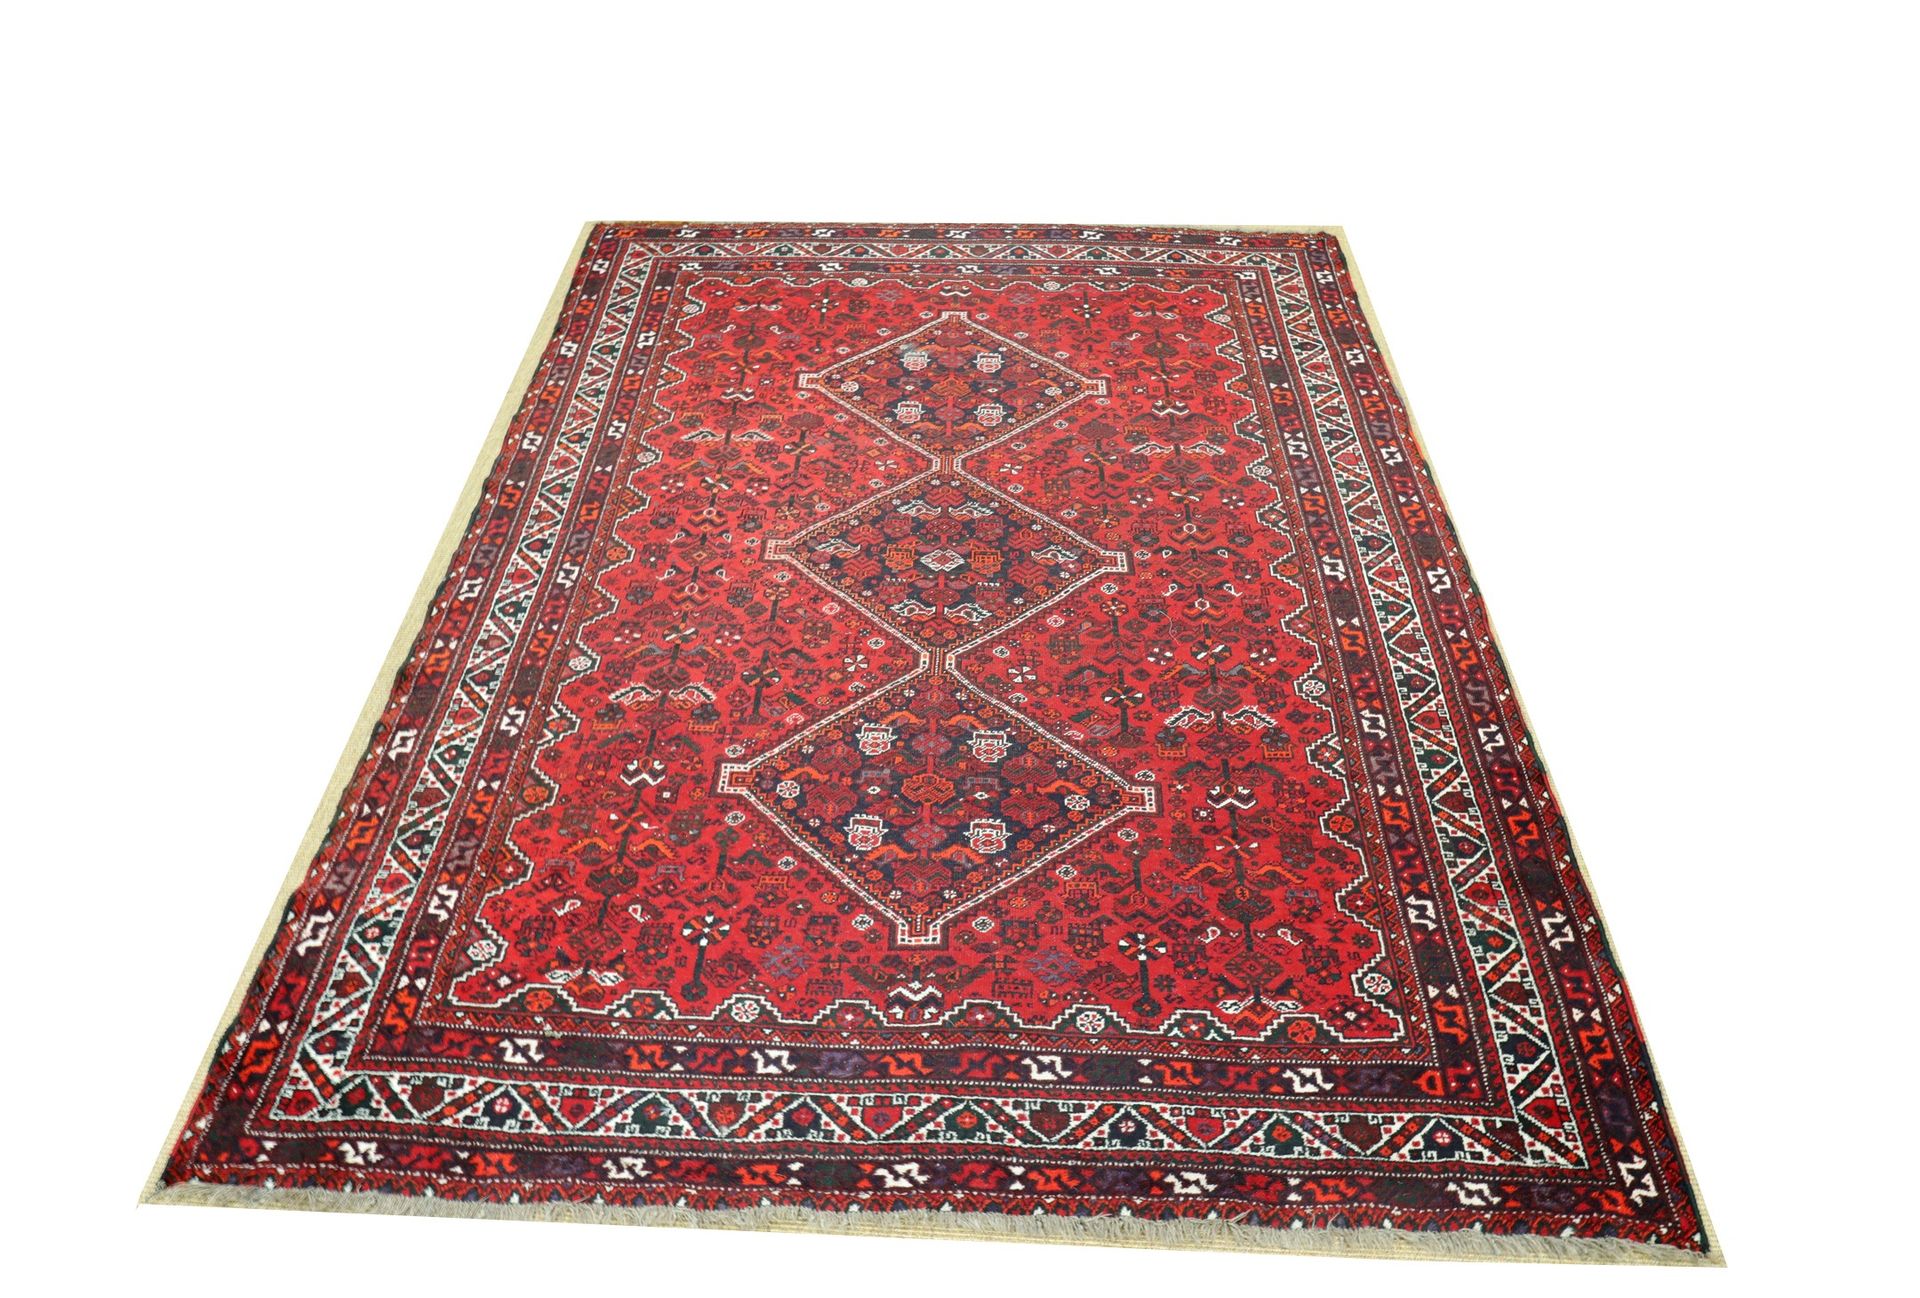 Null 砖红色背景和几何图案的地毯

现代工作

215 x 300 cm

使用和维护的条件